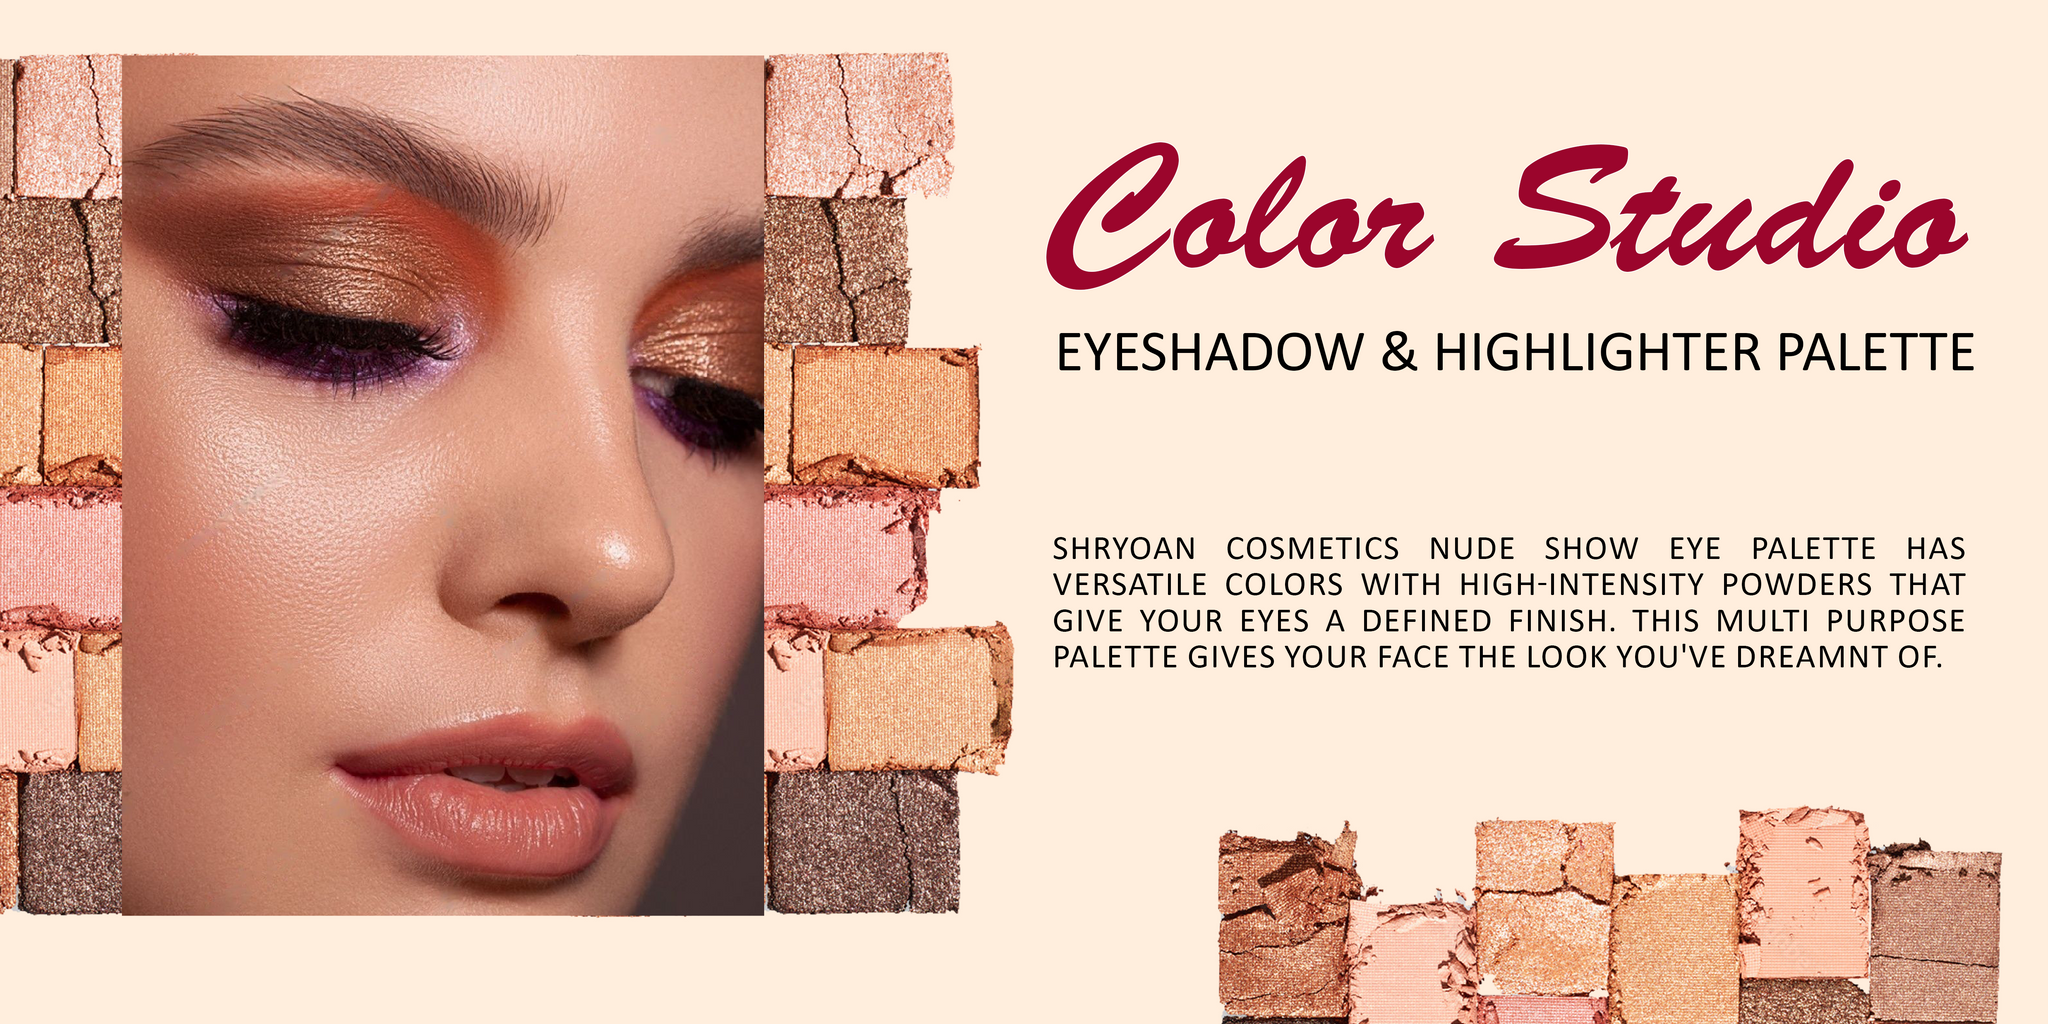 Eyeshadows Highlighter Palette